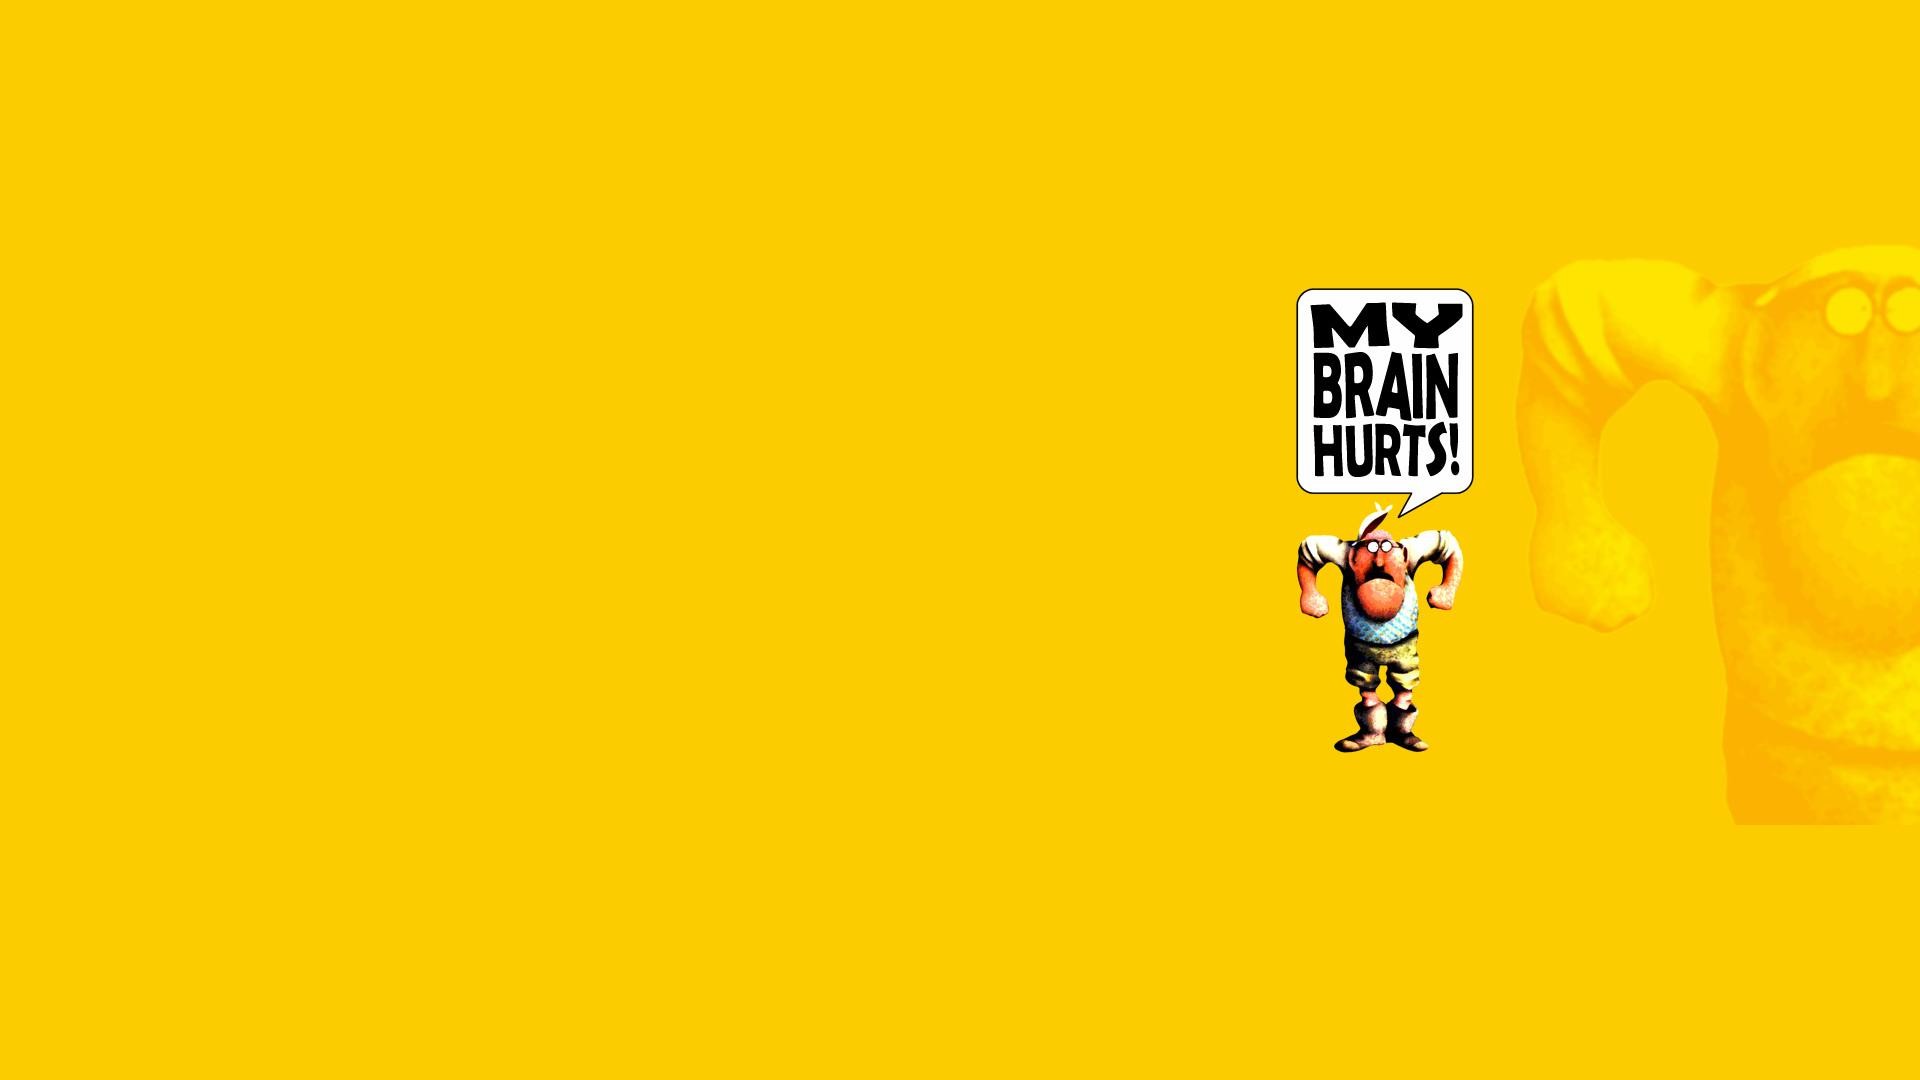 Monty Python Yellow cartoon humor movies text wallpaper